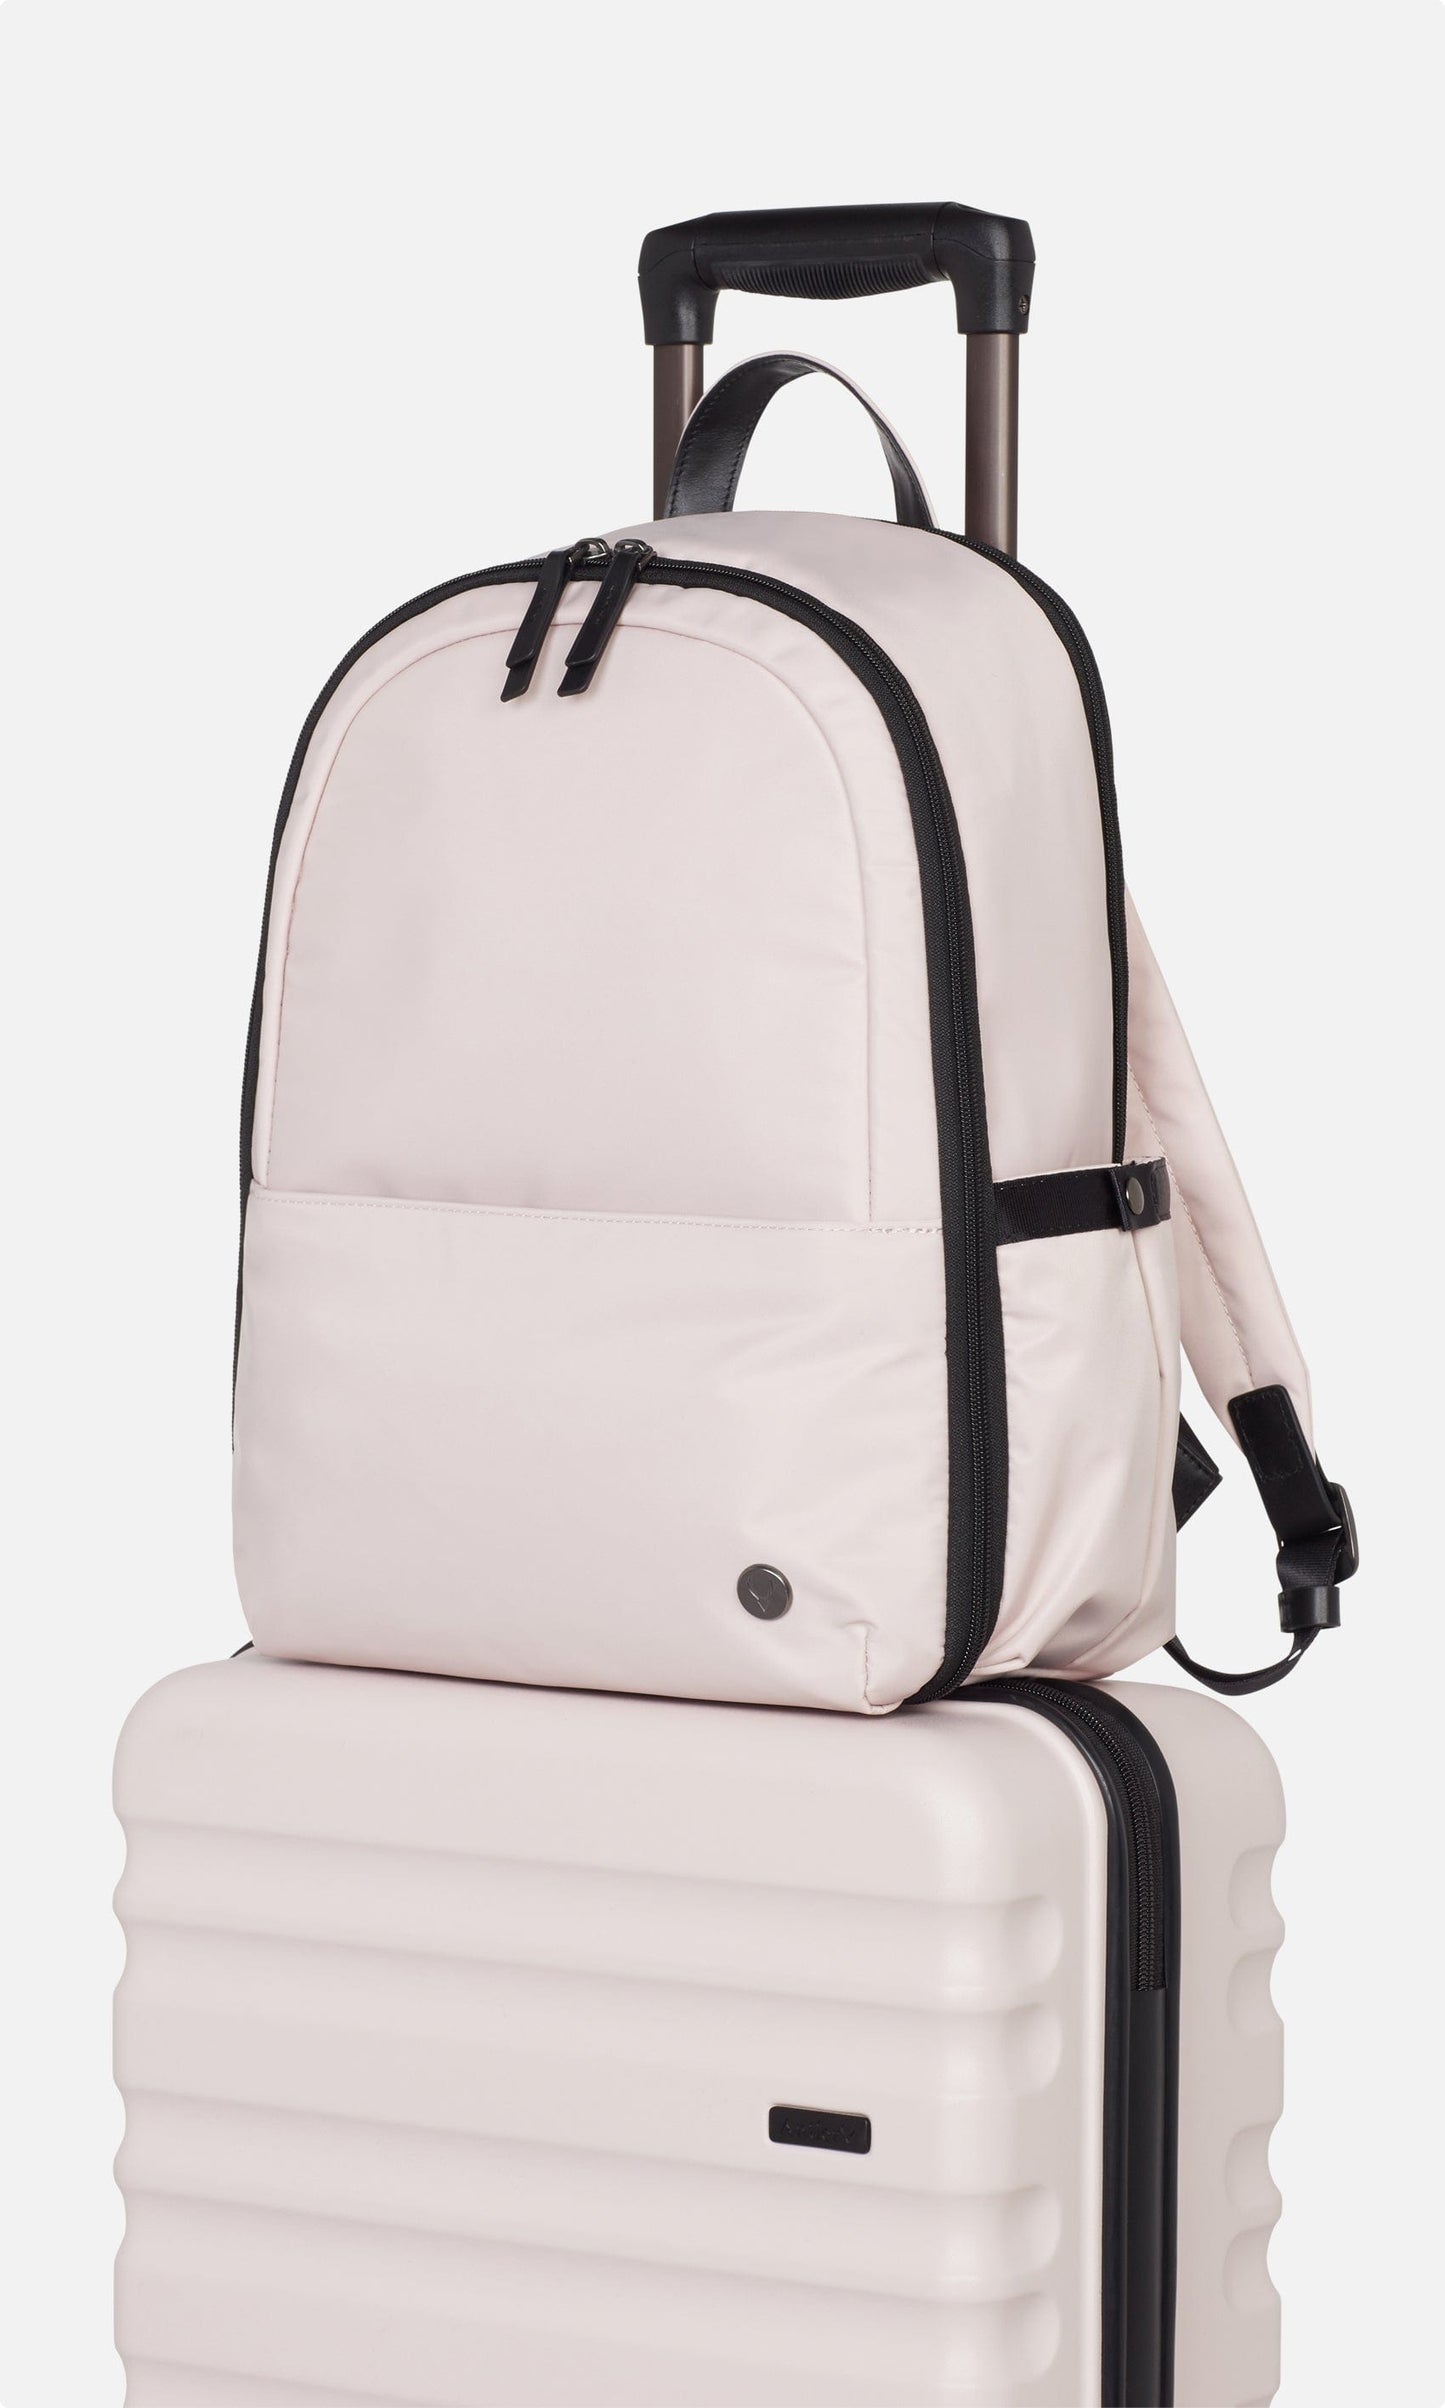 Antler Luggage -  Chelsea large backpack in blush - Backpacks Chelsea Backpack Blush (Pink) | Travel & Lifestyle Bags | Antler UK